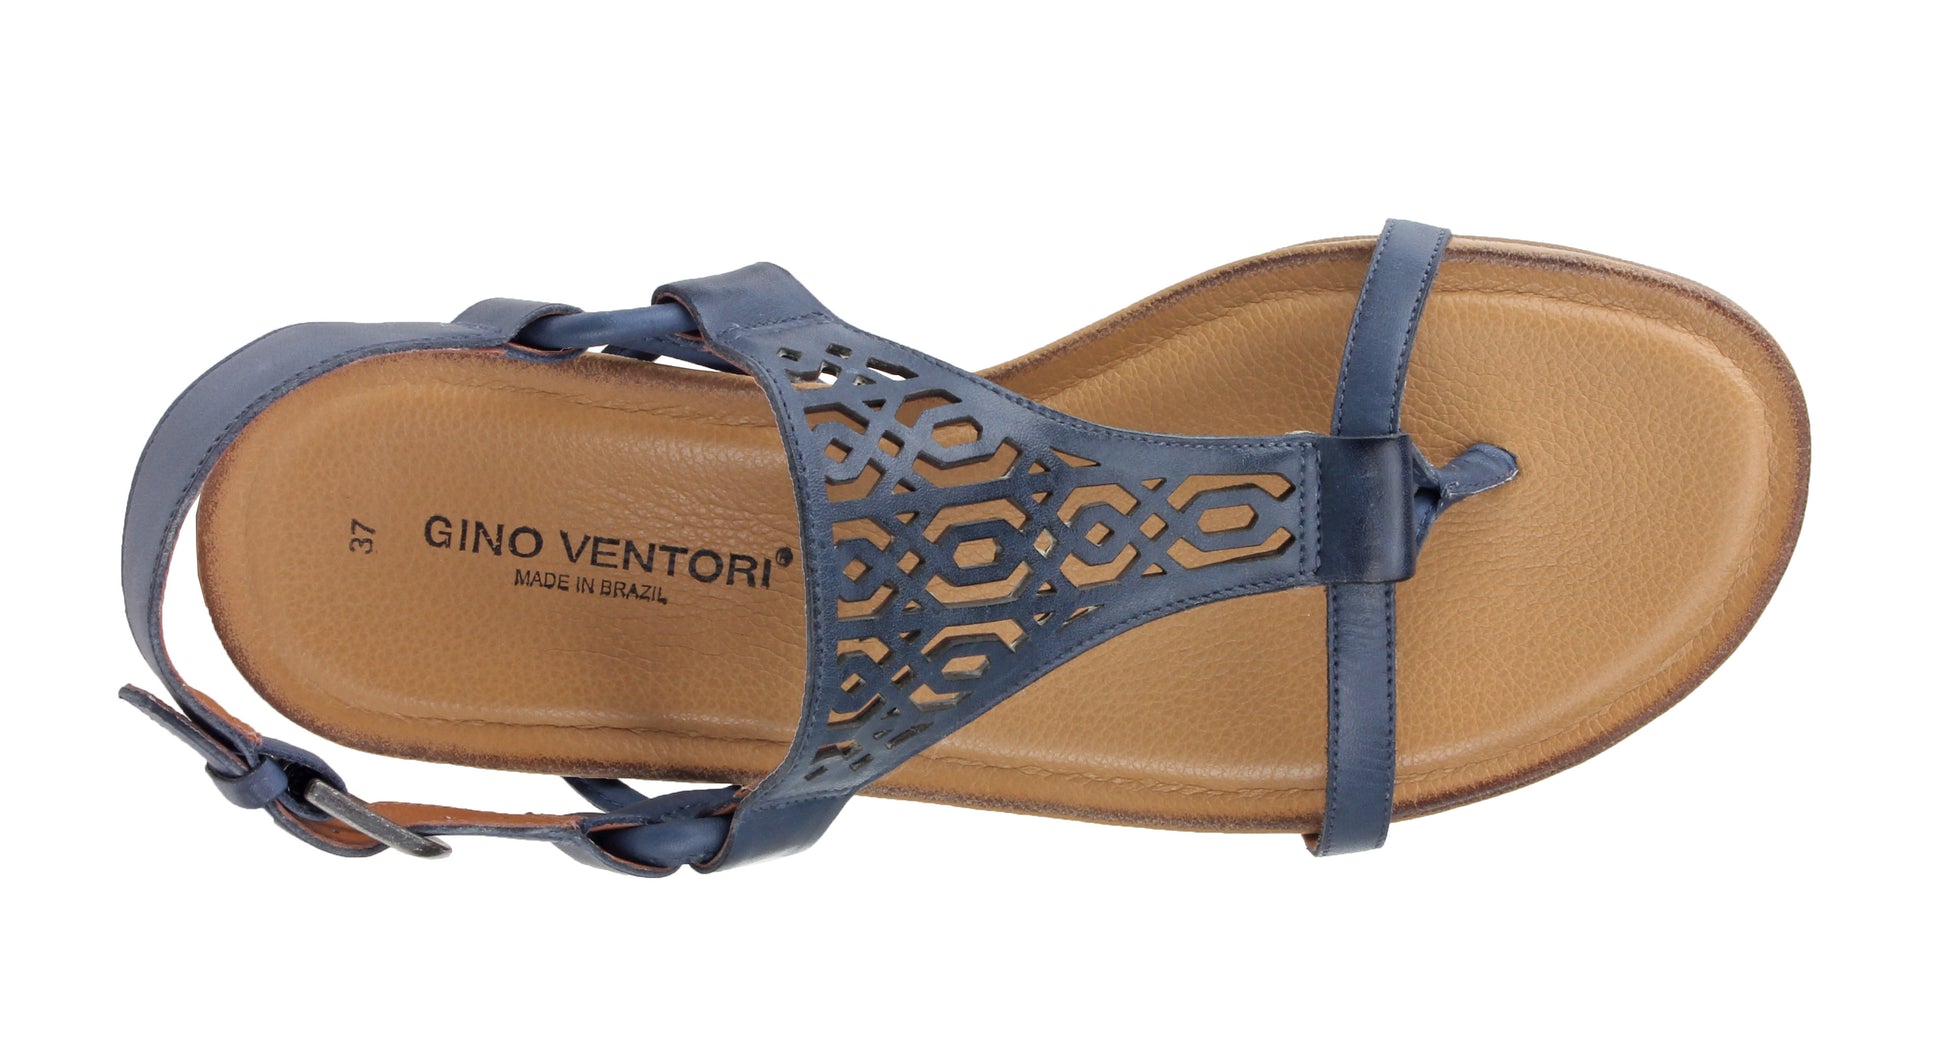 FARLEY GV SANDAL - GINO VENTORI - 36, 37, 38, 39, 40, 41, 42, BF, NAVY, Rose Gold, Sand, sandals, SILVER, womens footwear - Stomp Shoes Darwin